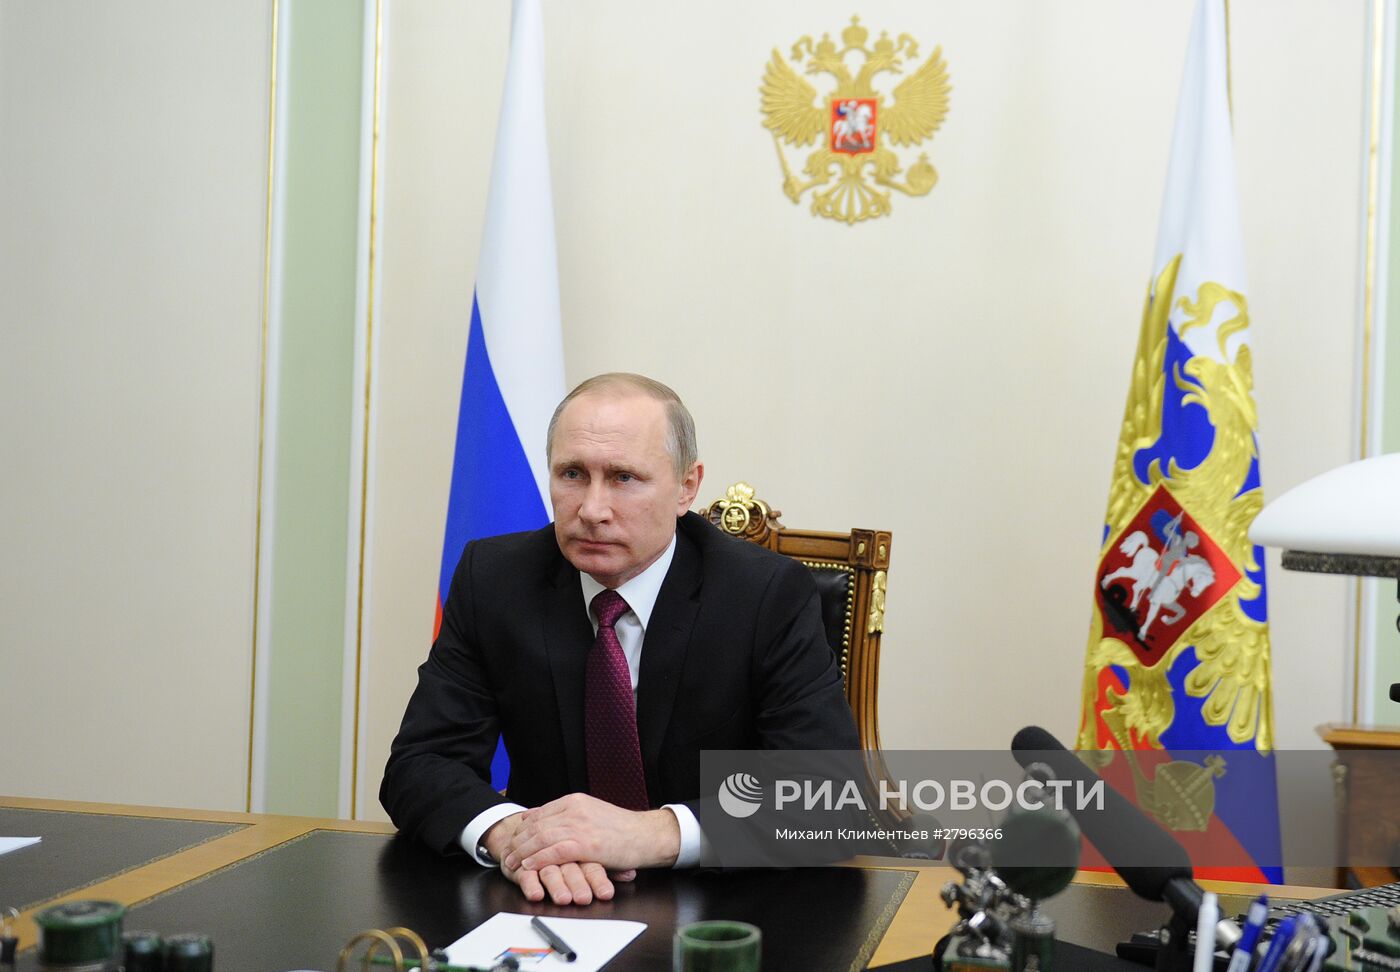 Обращение президента РФ В. Путина в связи с принятием совместного заявления России и США по Сирии